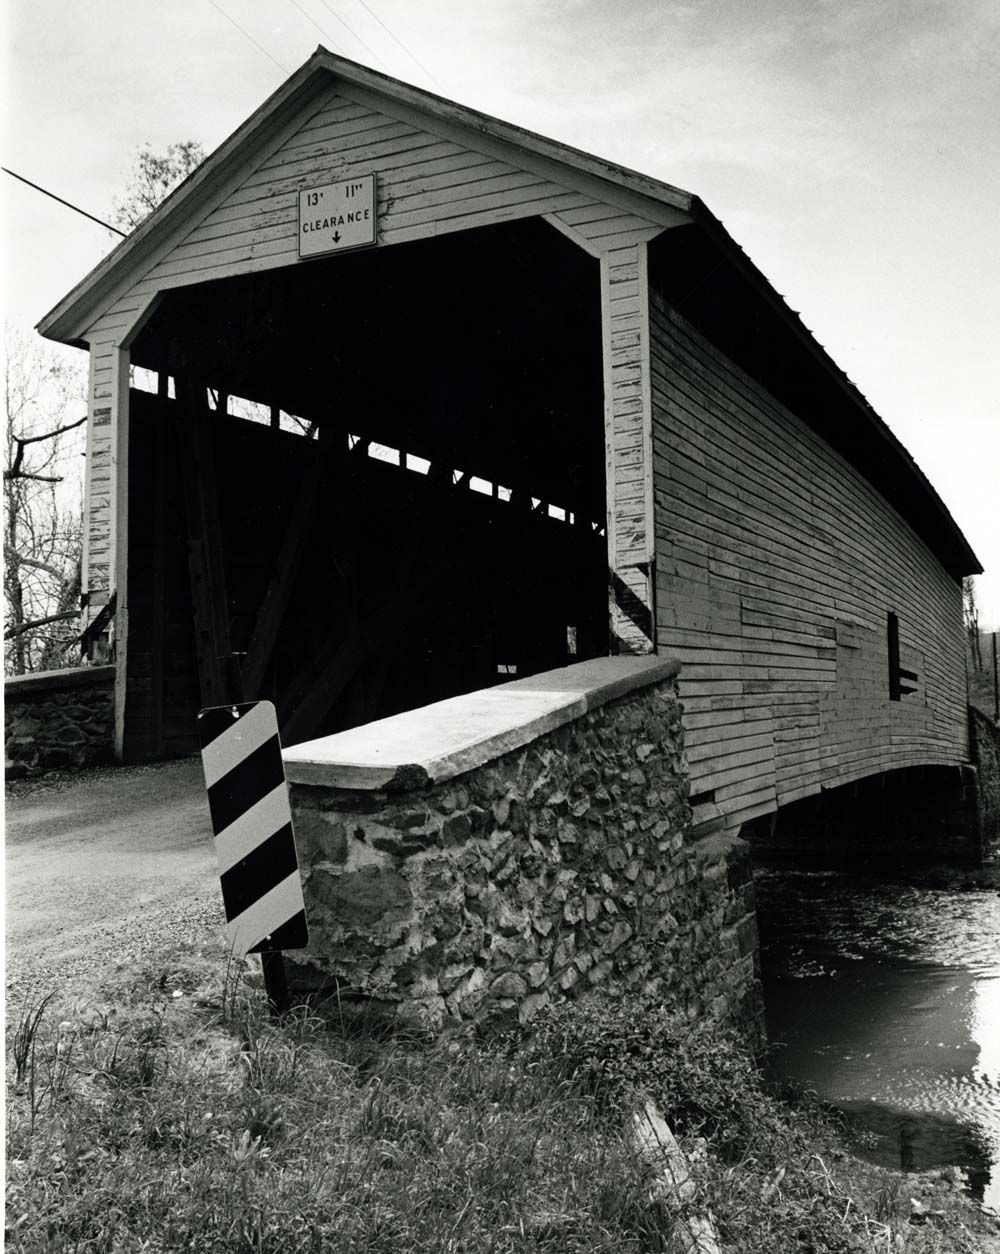 Jack's Mtn. Bridge, Tom's Creek, SW of Fairfield